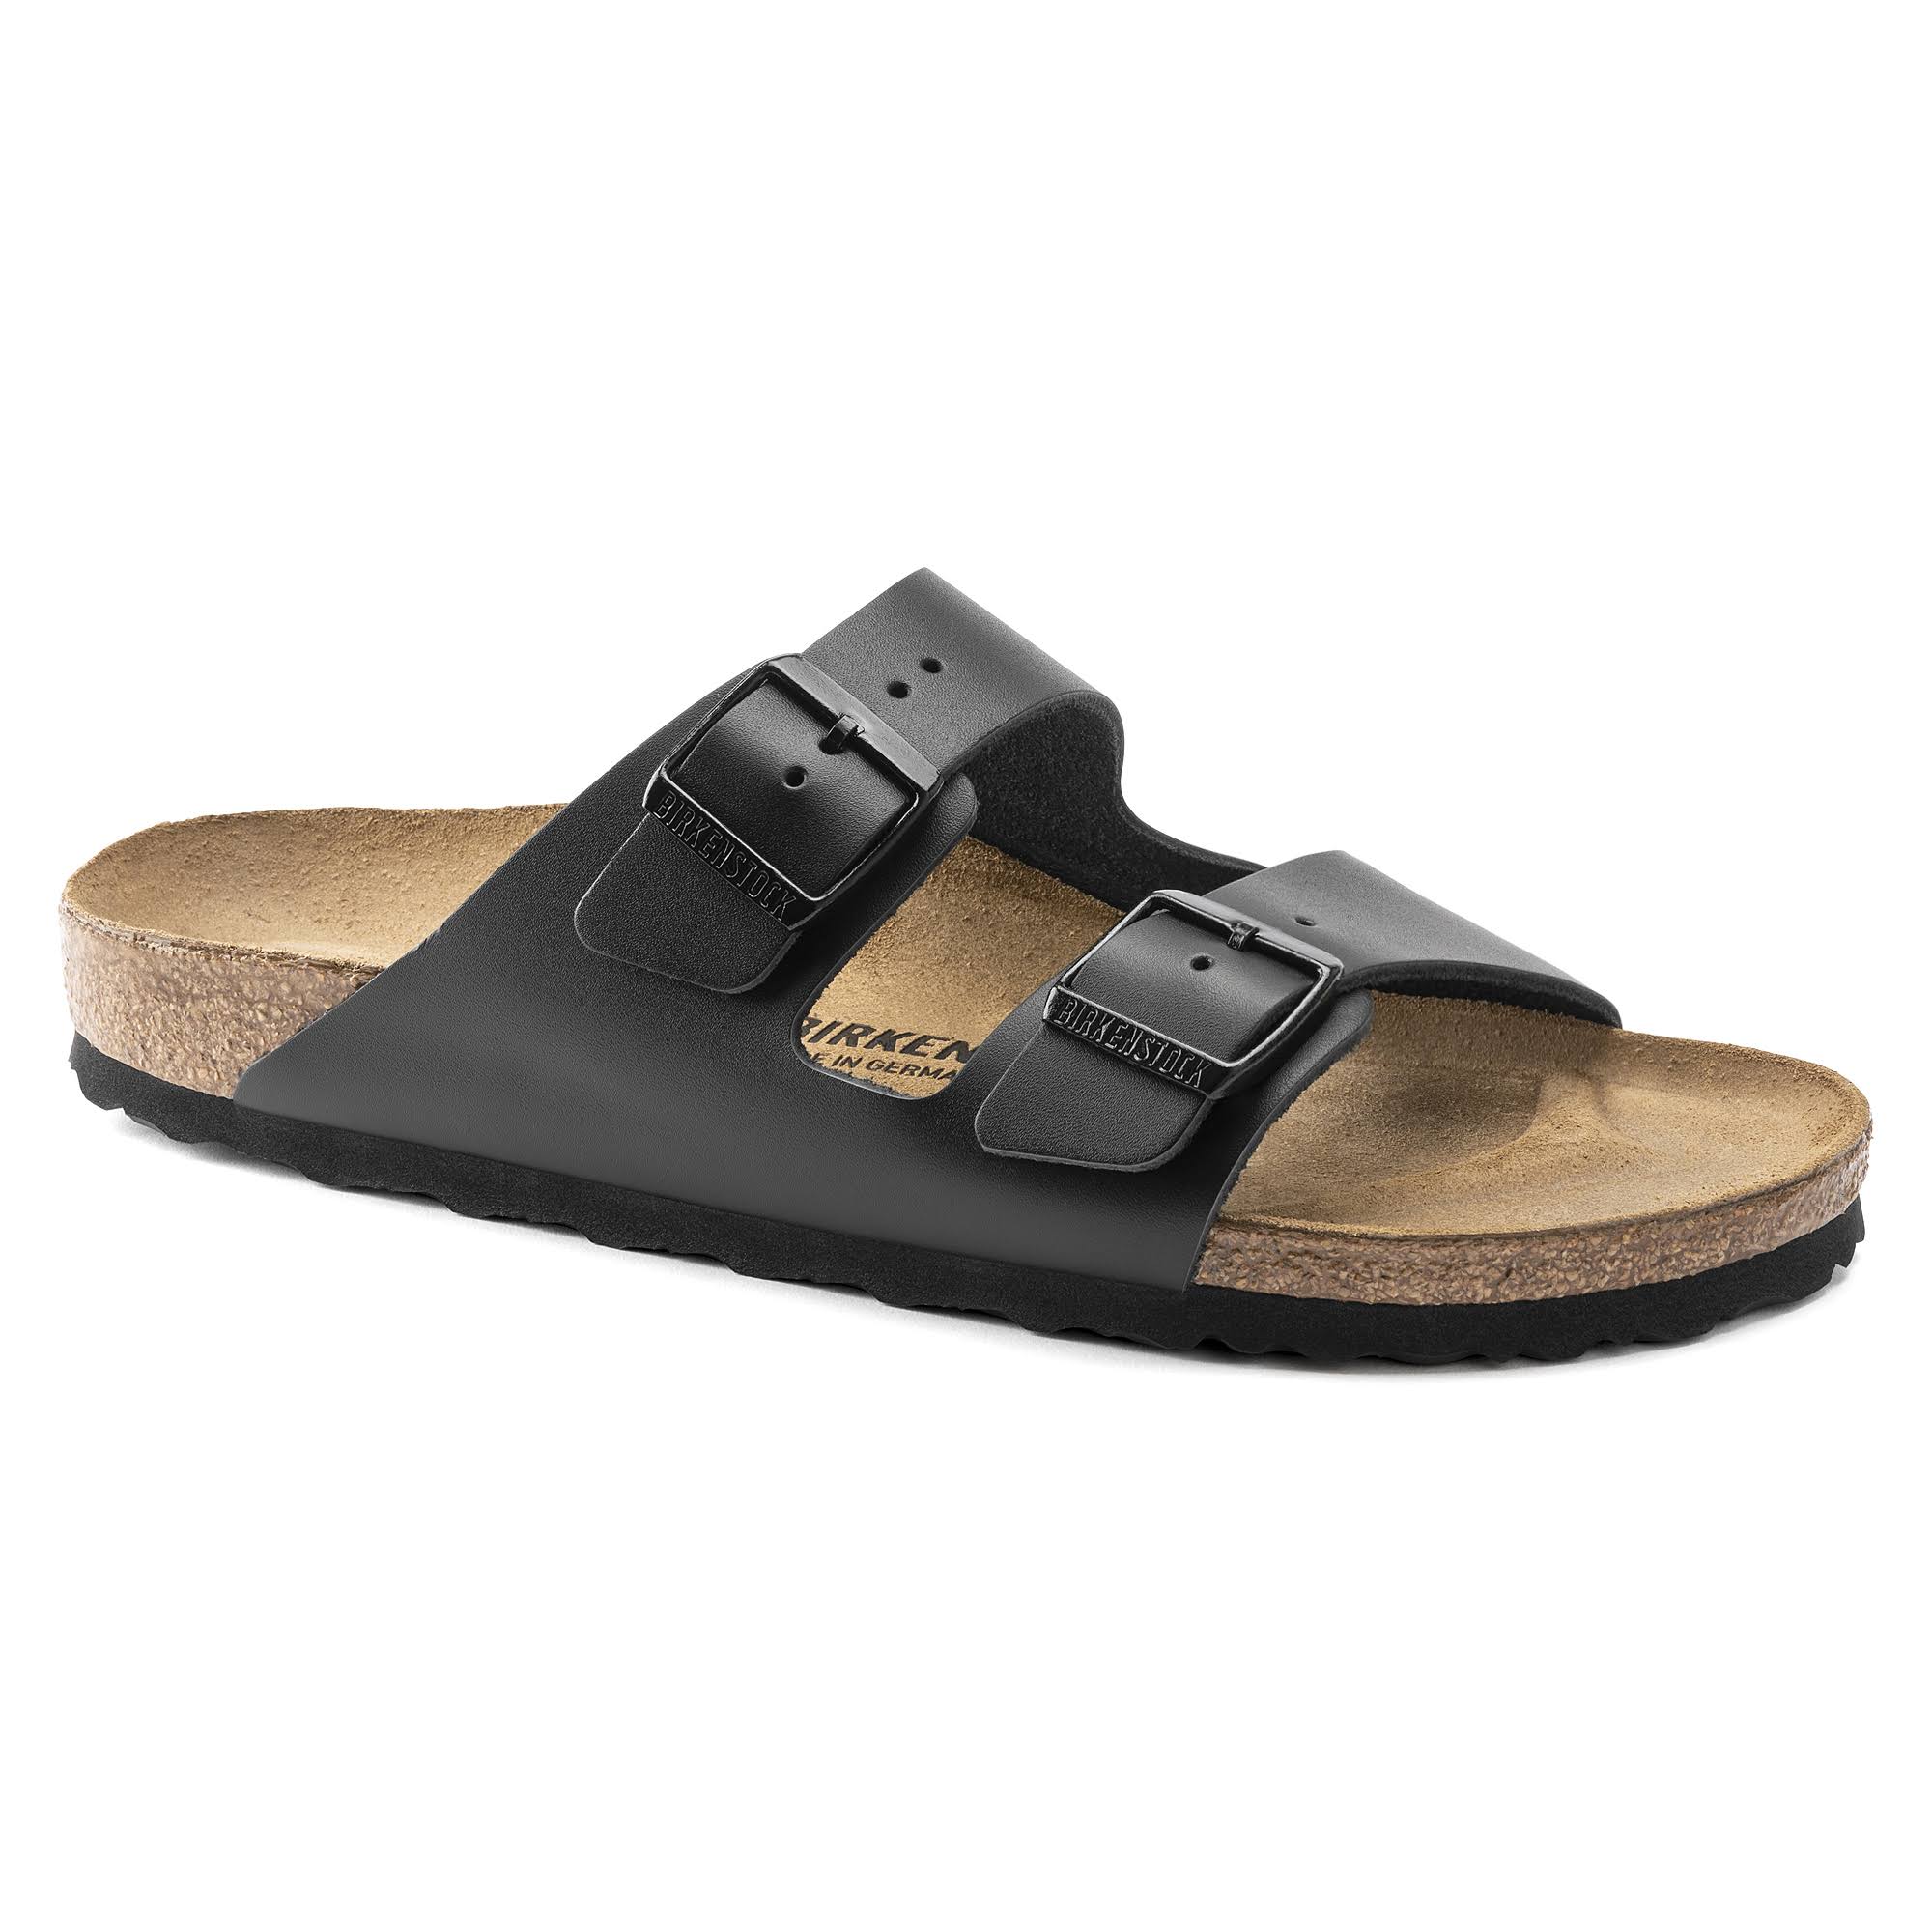 Birkenstock Arizona Soft Footbed Habana Sandals - Brown